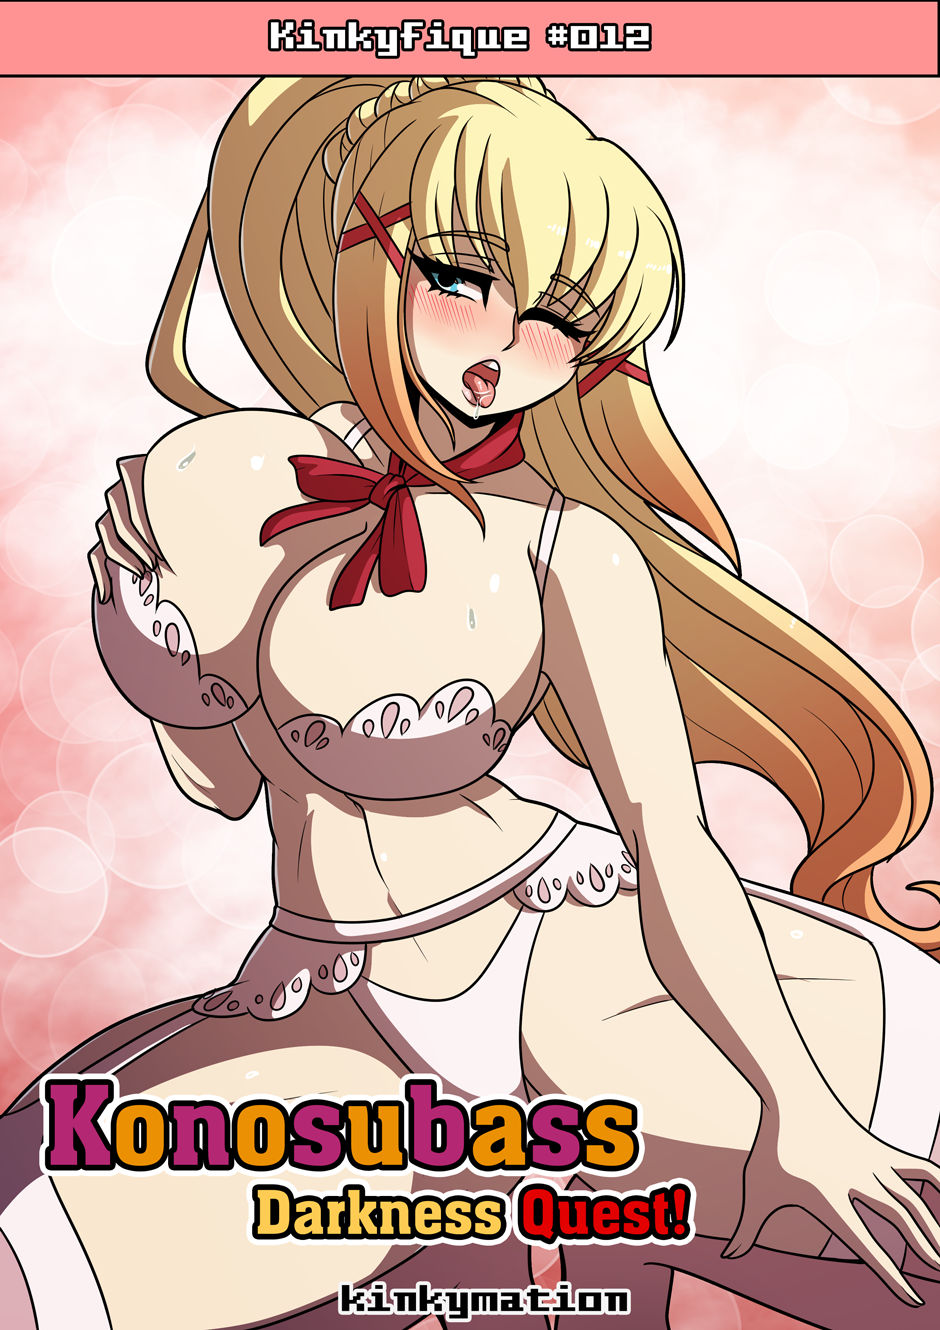 [Kinkymation] – Konosubass – Darkness Quest! - 1